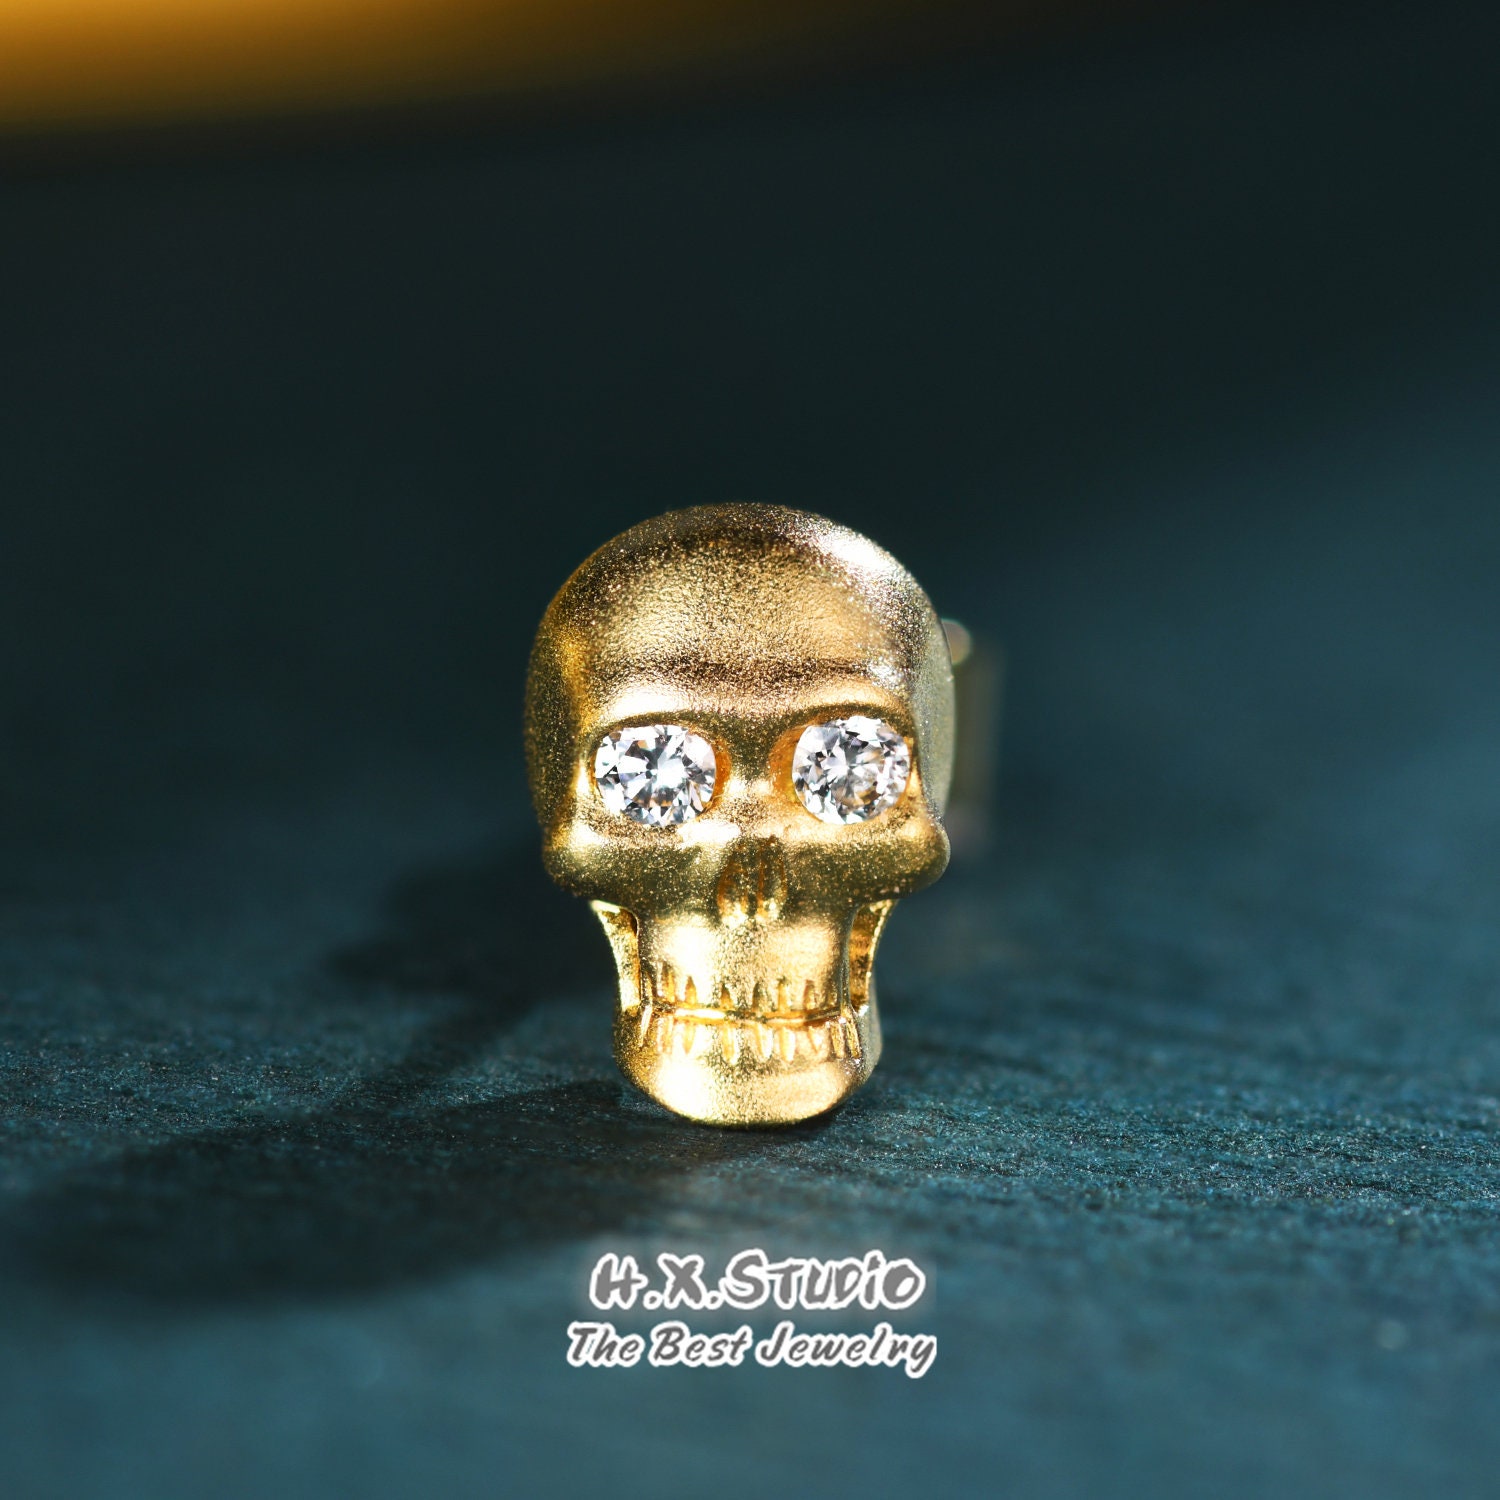 Dainty Diamond Skull Stud Earrings, Solid 18K Gold, Custom Jewelry, Personalization Design, Gothic Steam Punk Halloween Jewelry